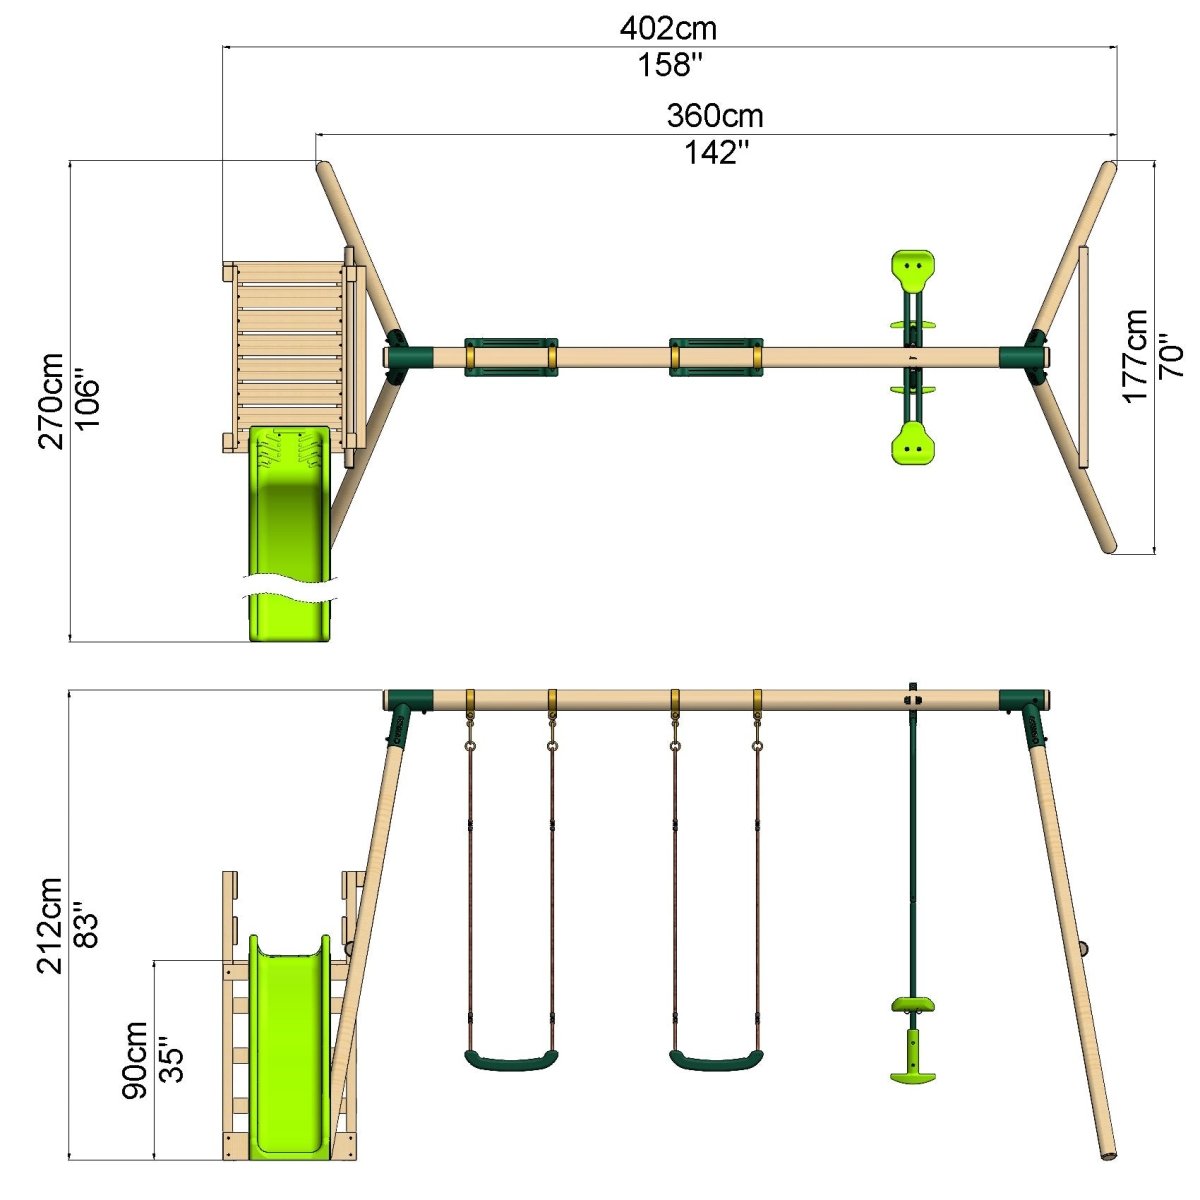 Rebo Wooden Swing Set plus Deck & Slide - Neptune Green